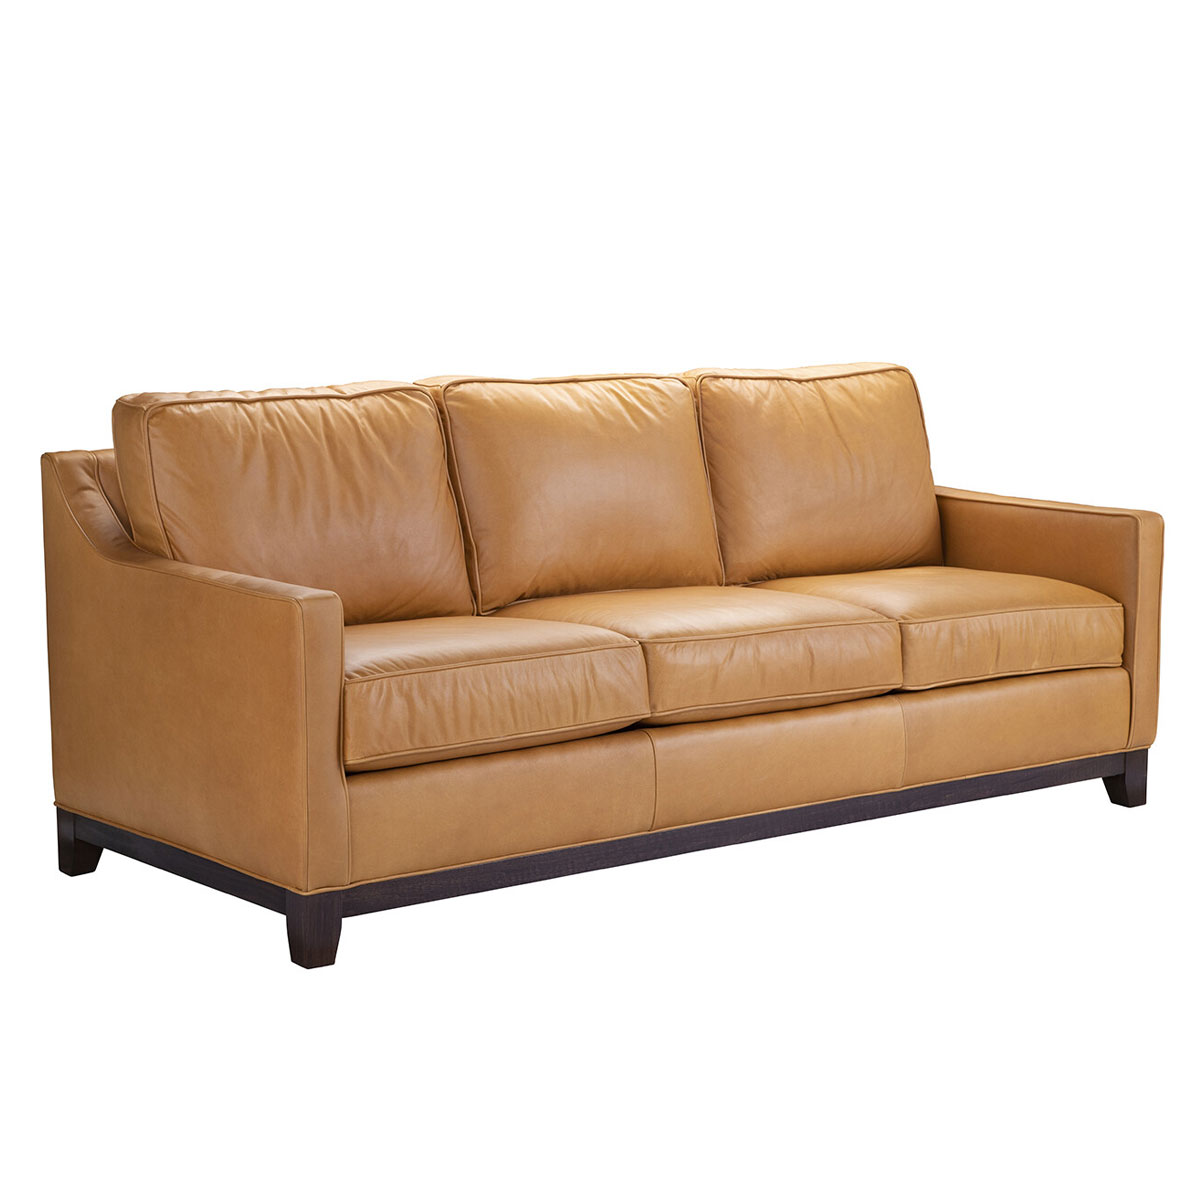 309 Kiawah Sofa by CC Leather